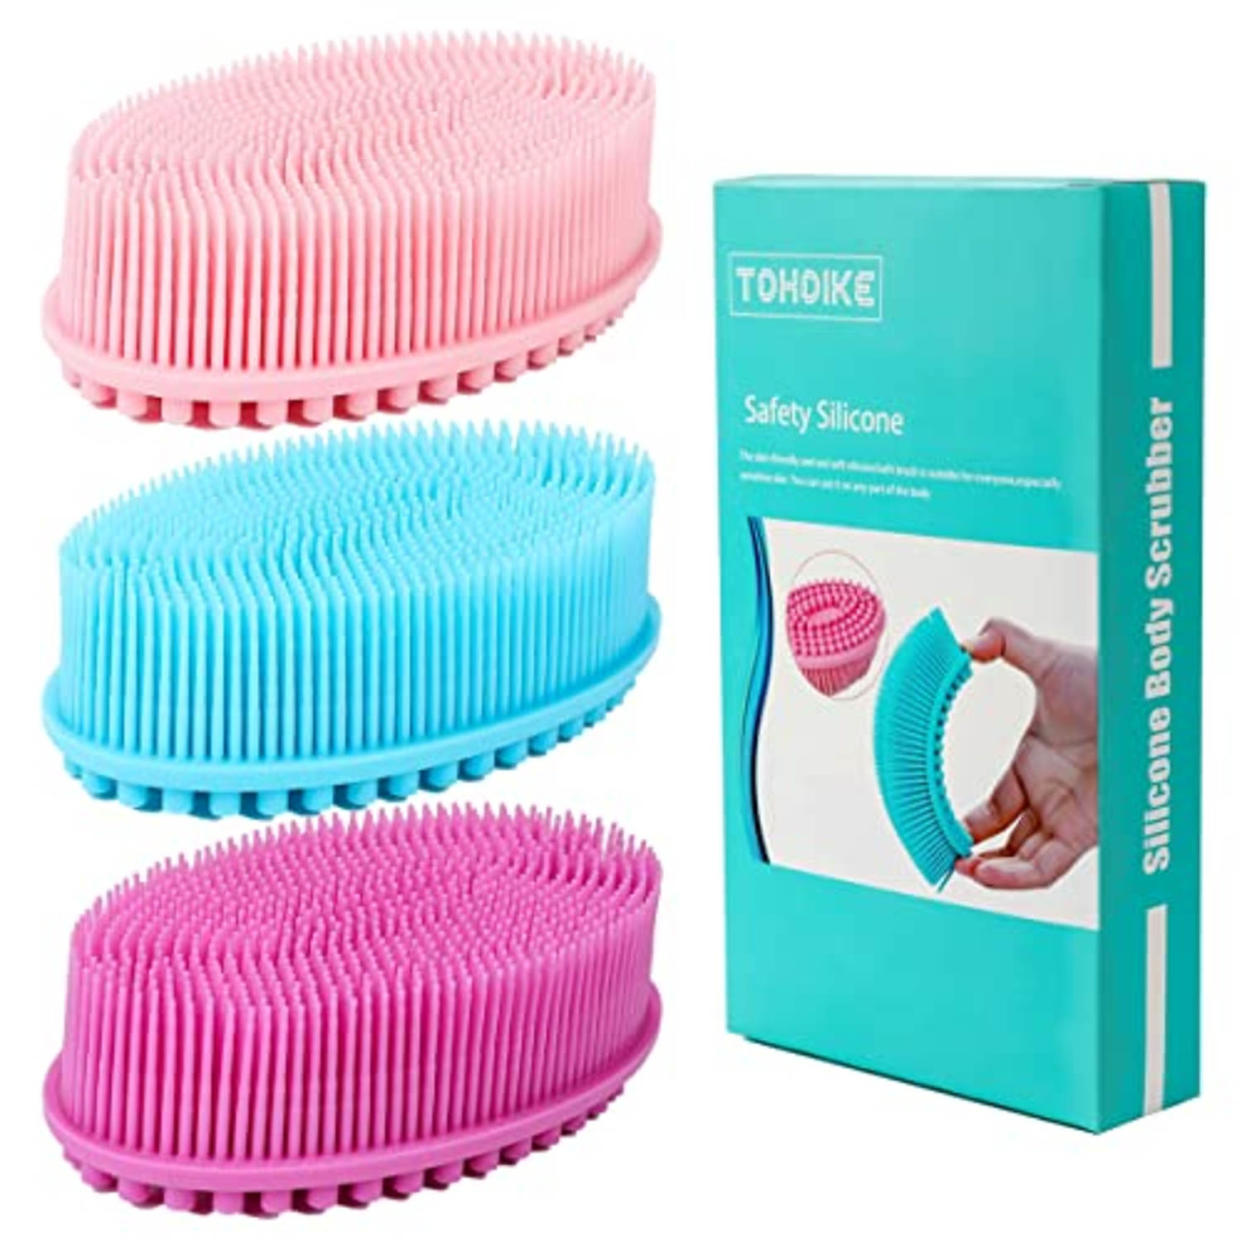 TDHDIKE Silicone Body Scrubber Loofah - Set of 3 Soft Exfoliating Body Bath Shower Scrubber Loofah Brush for Sensitive Kids Women Men All Kinds of Skin (AMAZON)